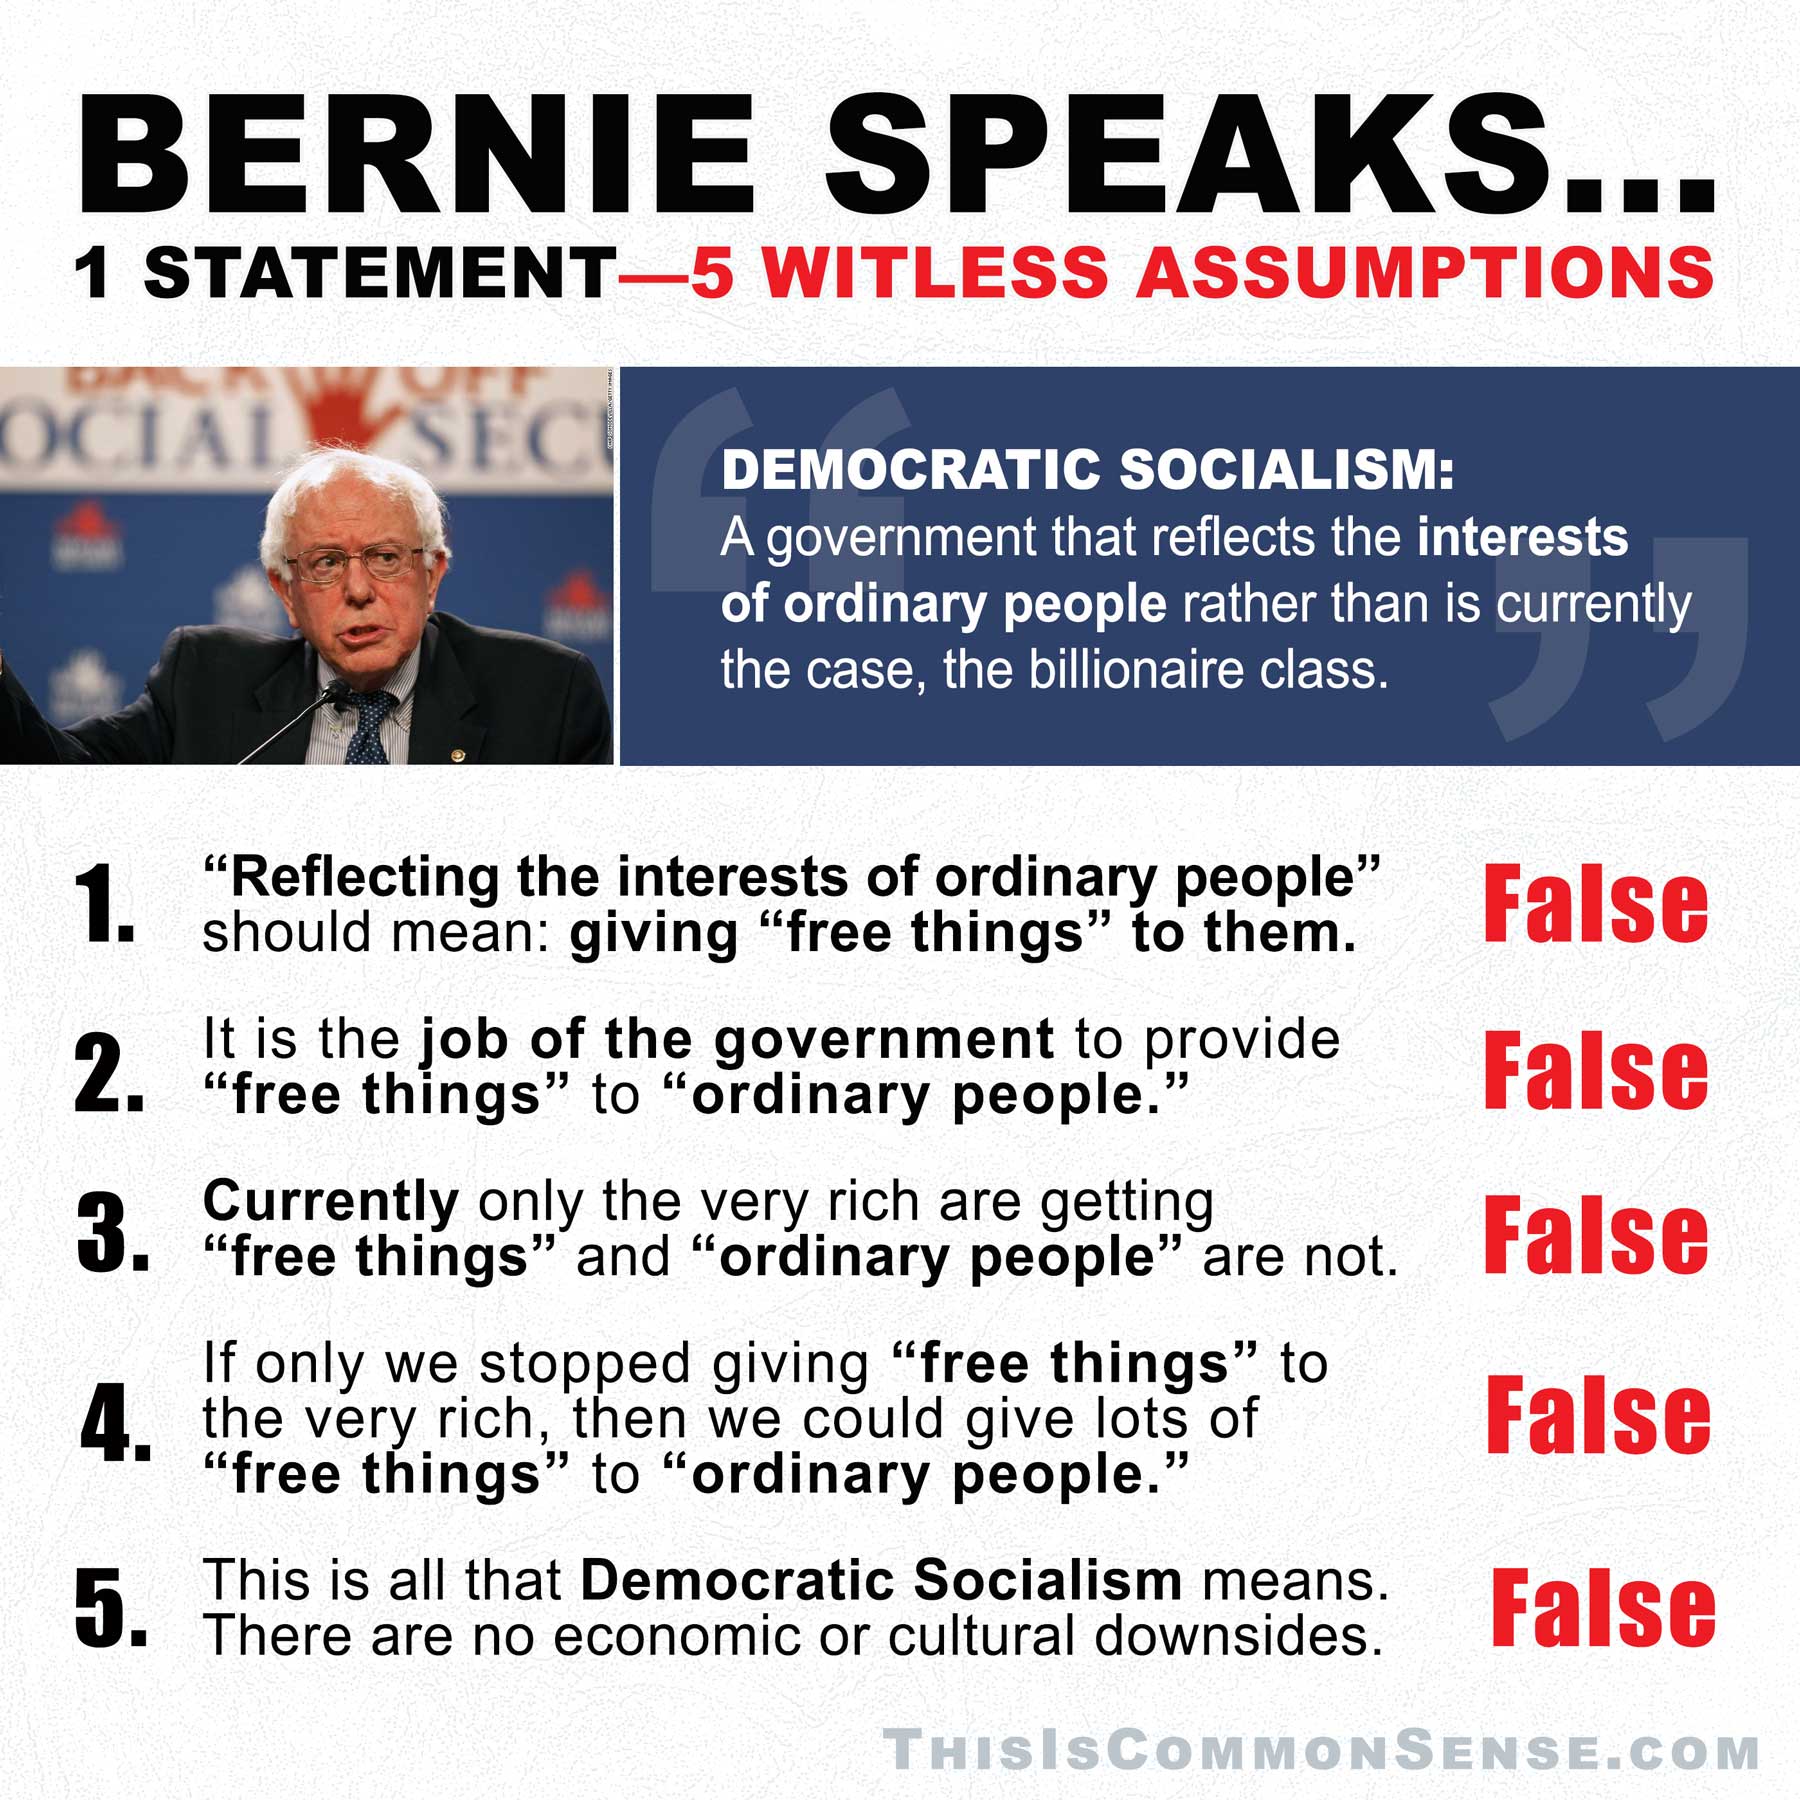 Bernie Sanders, 1 statement, 5 witless assumptions, free, ordinary, rich